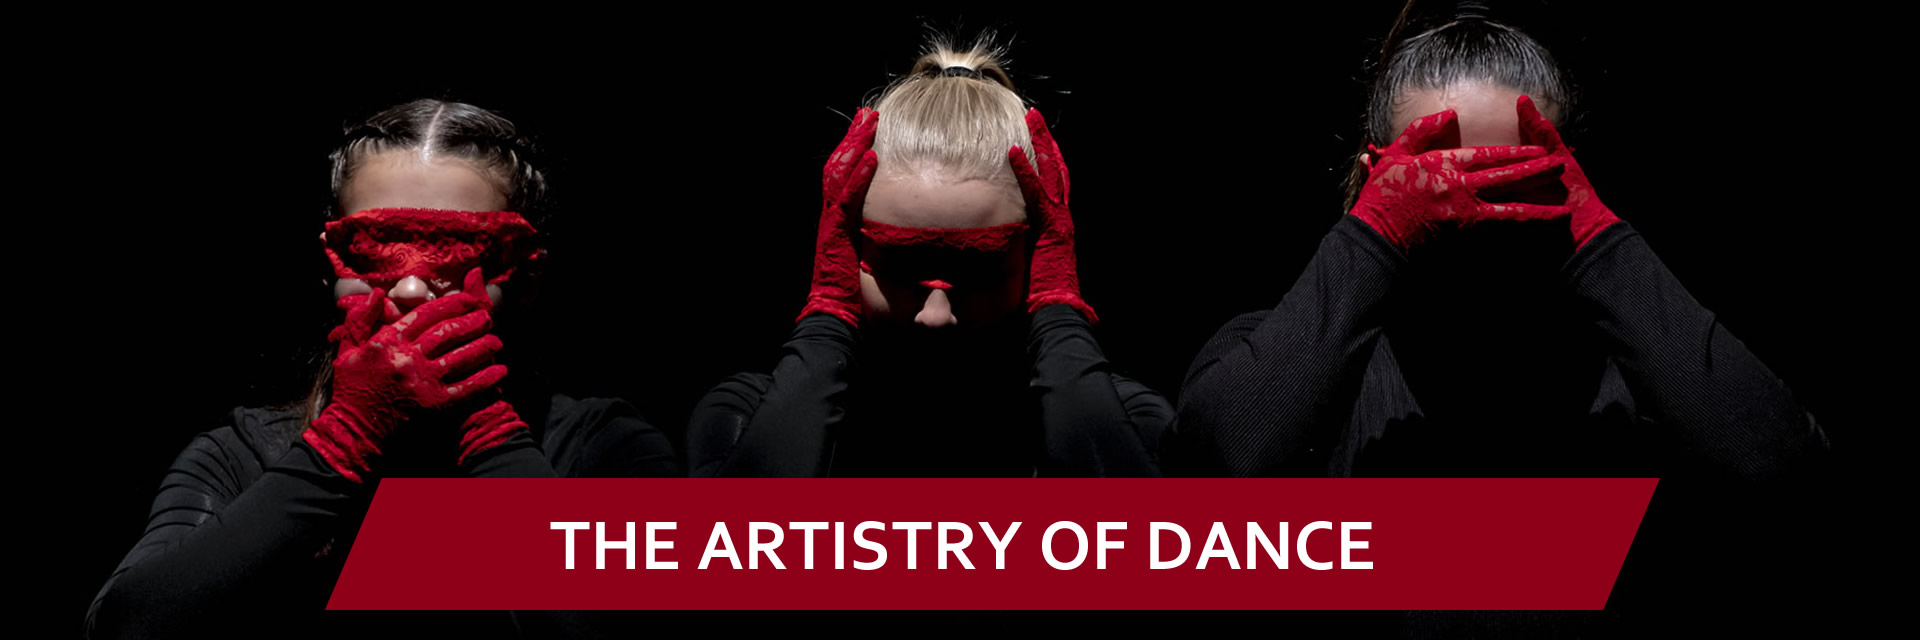 the-artistry-of-dance-banner-001